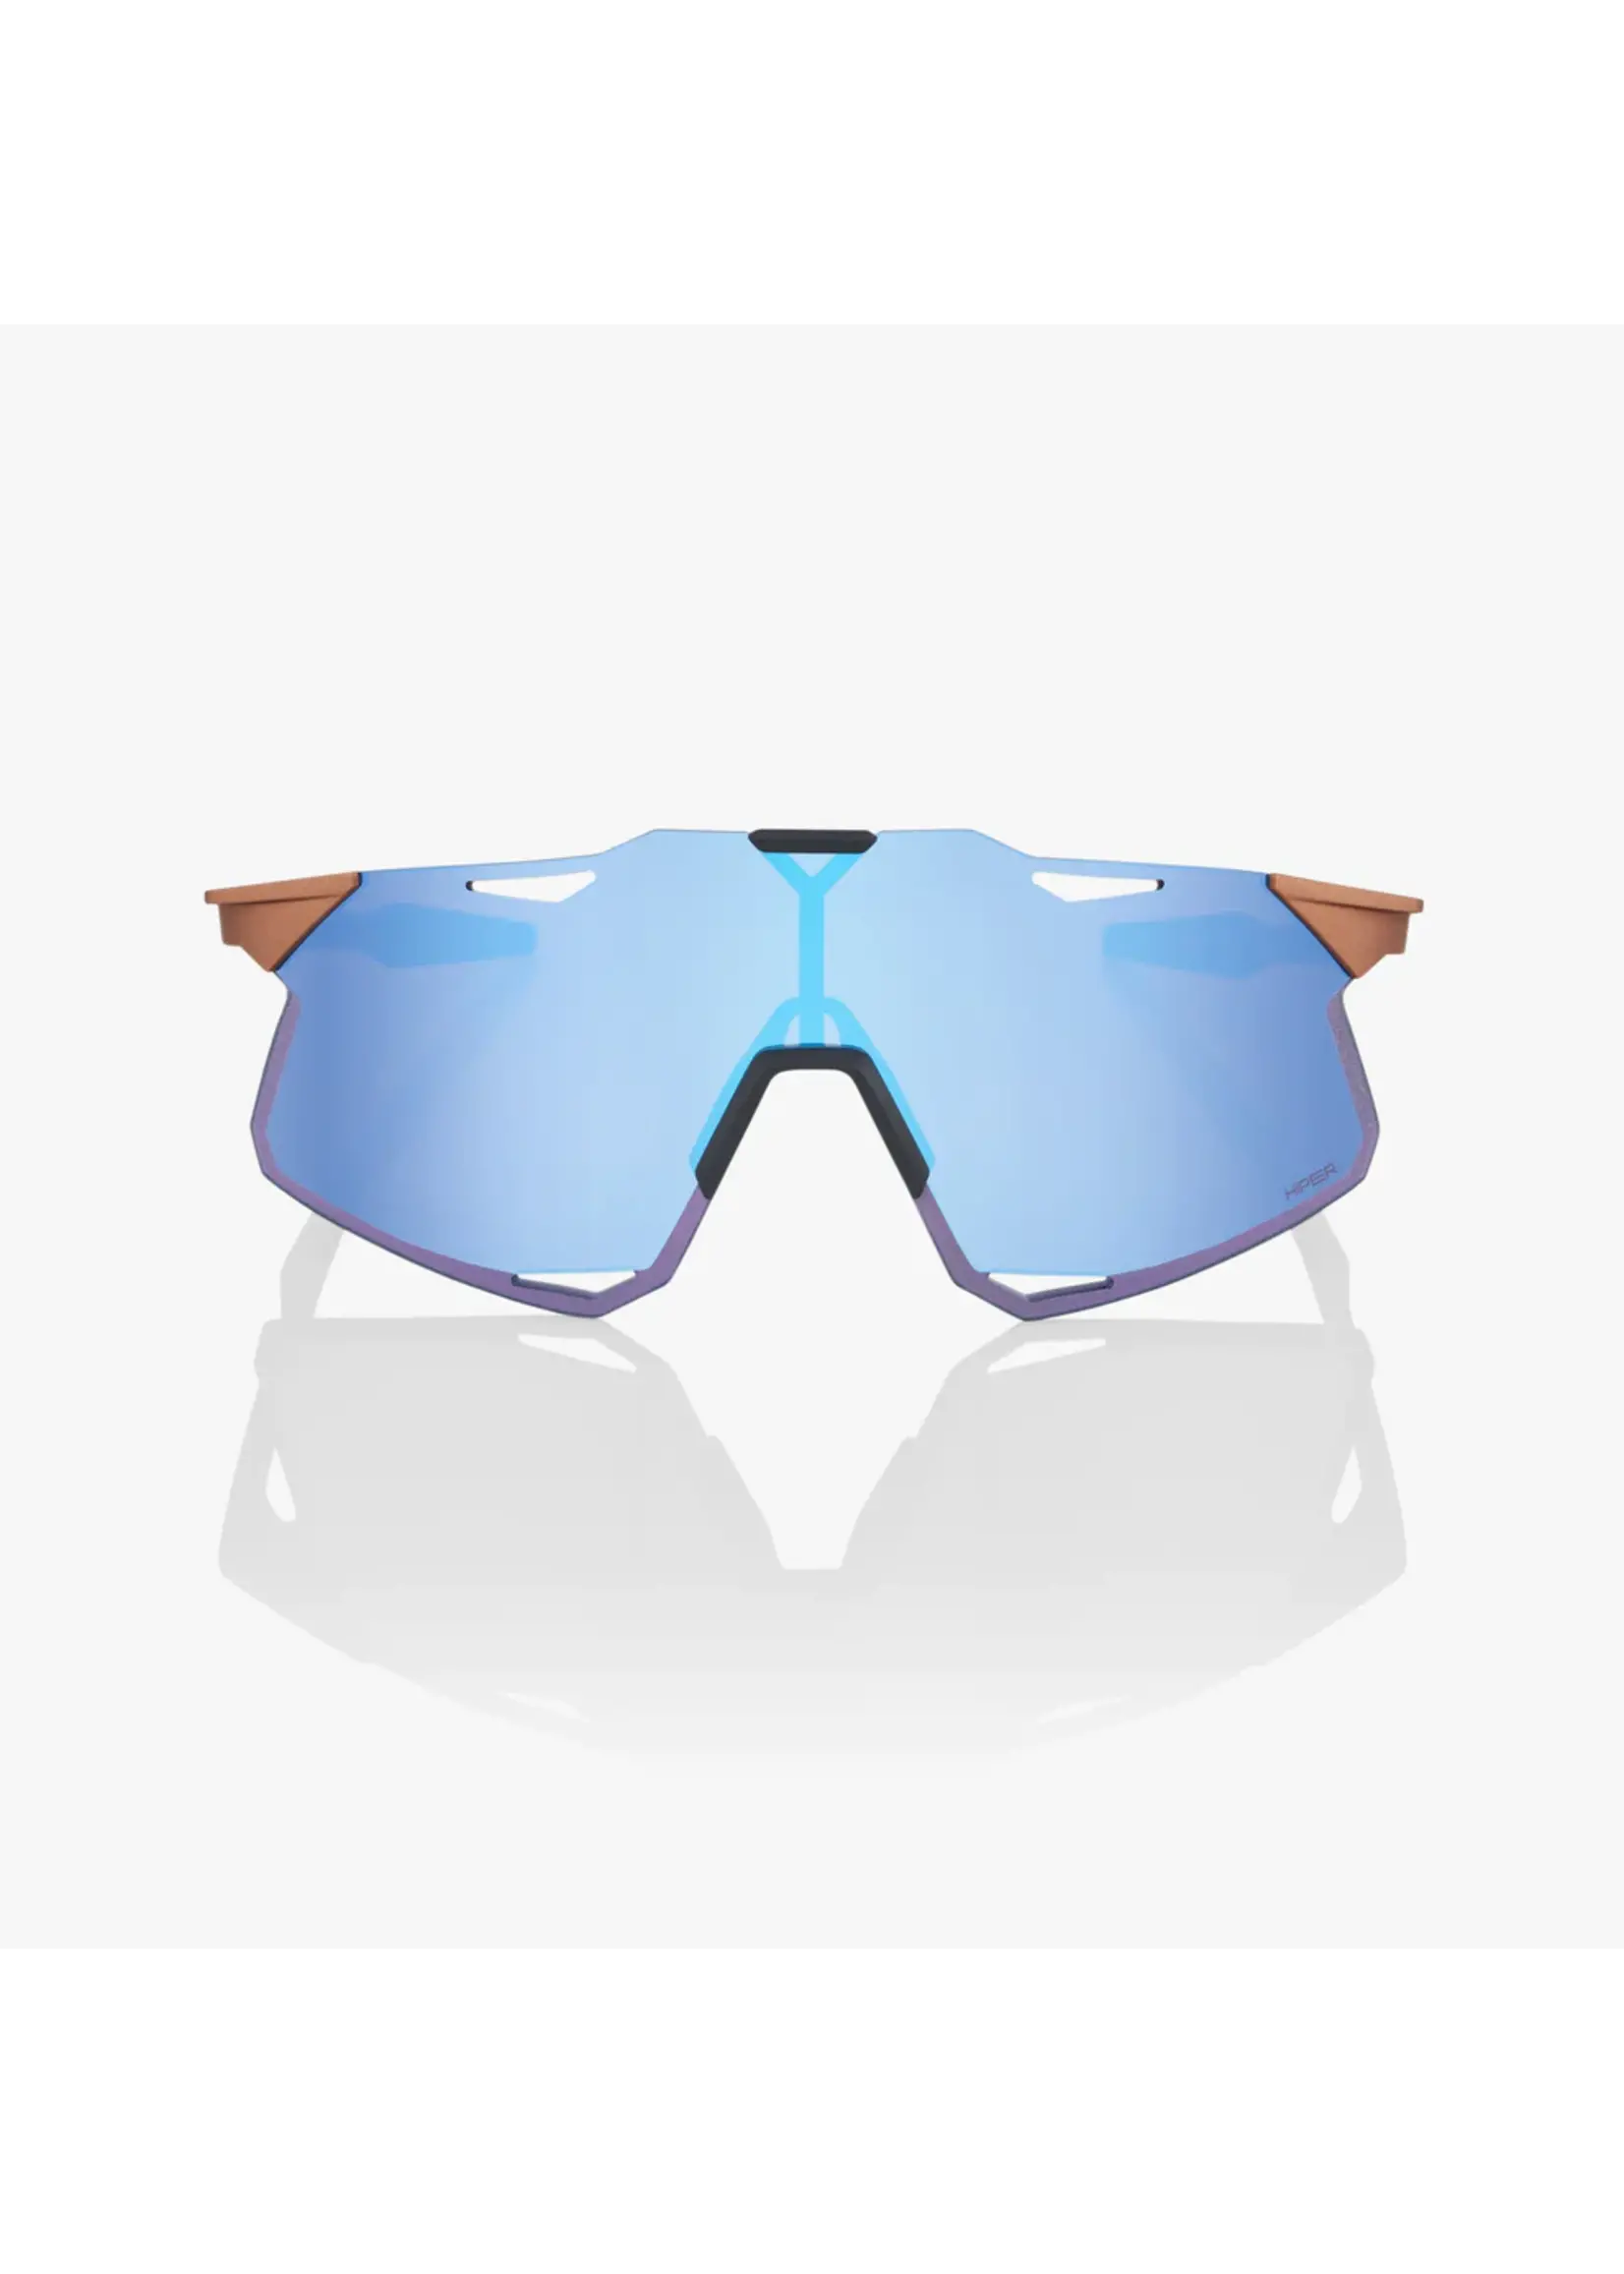 100 Percent 100% Hypercraft Sunglasses - Matte Copper Chromium - HiPER Blue Multilayer Mirror Lens